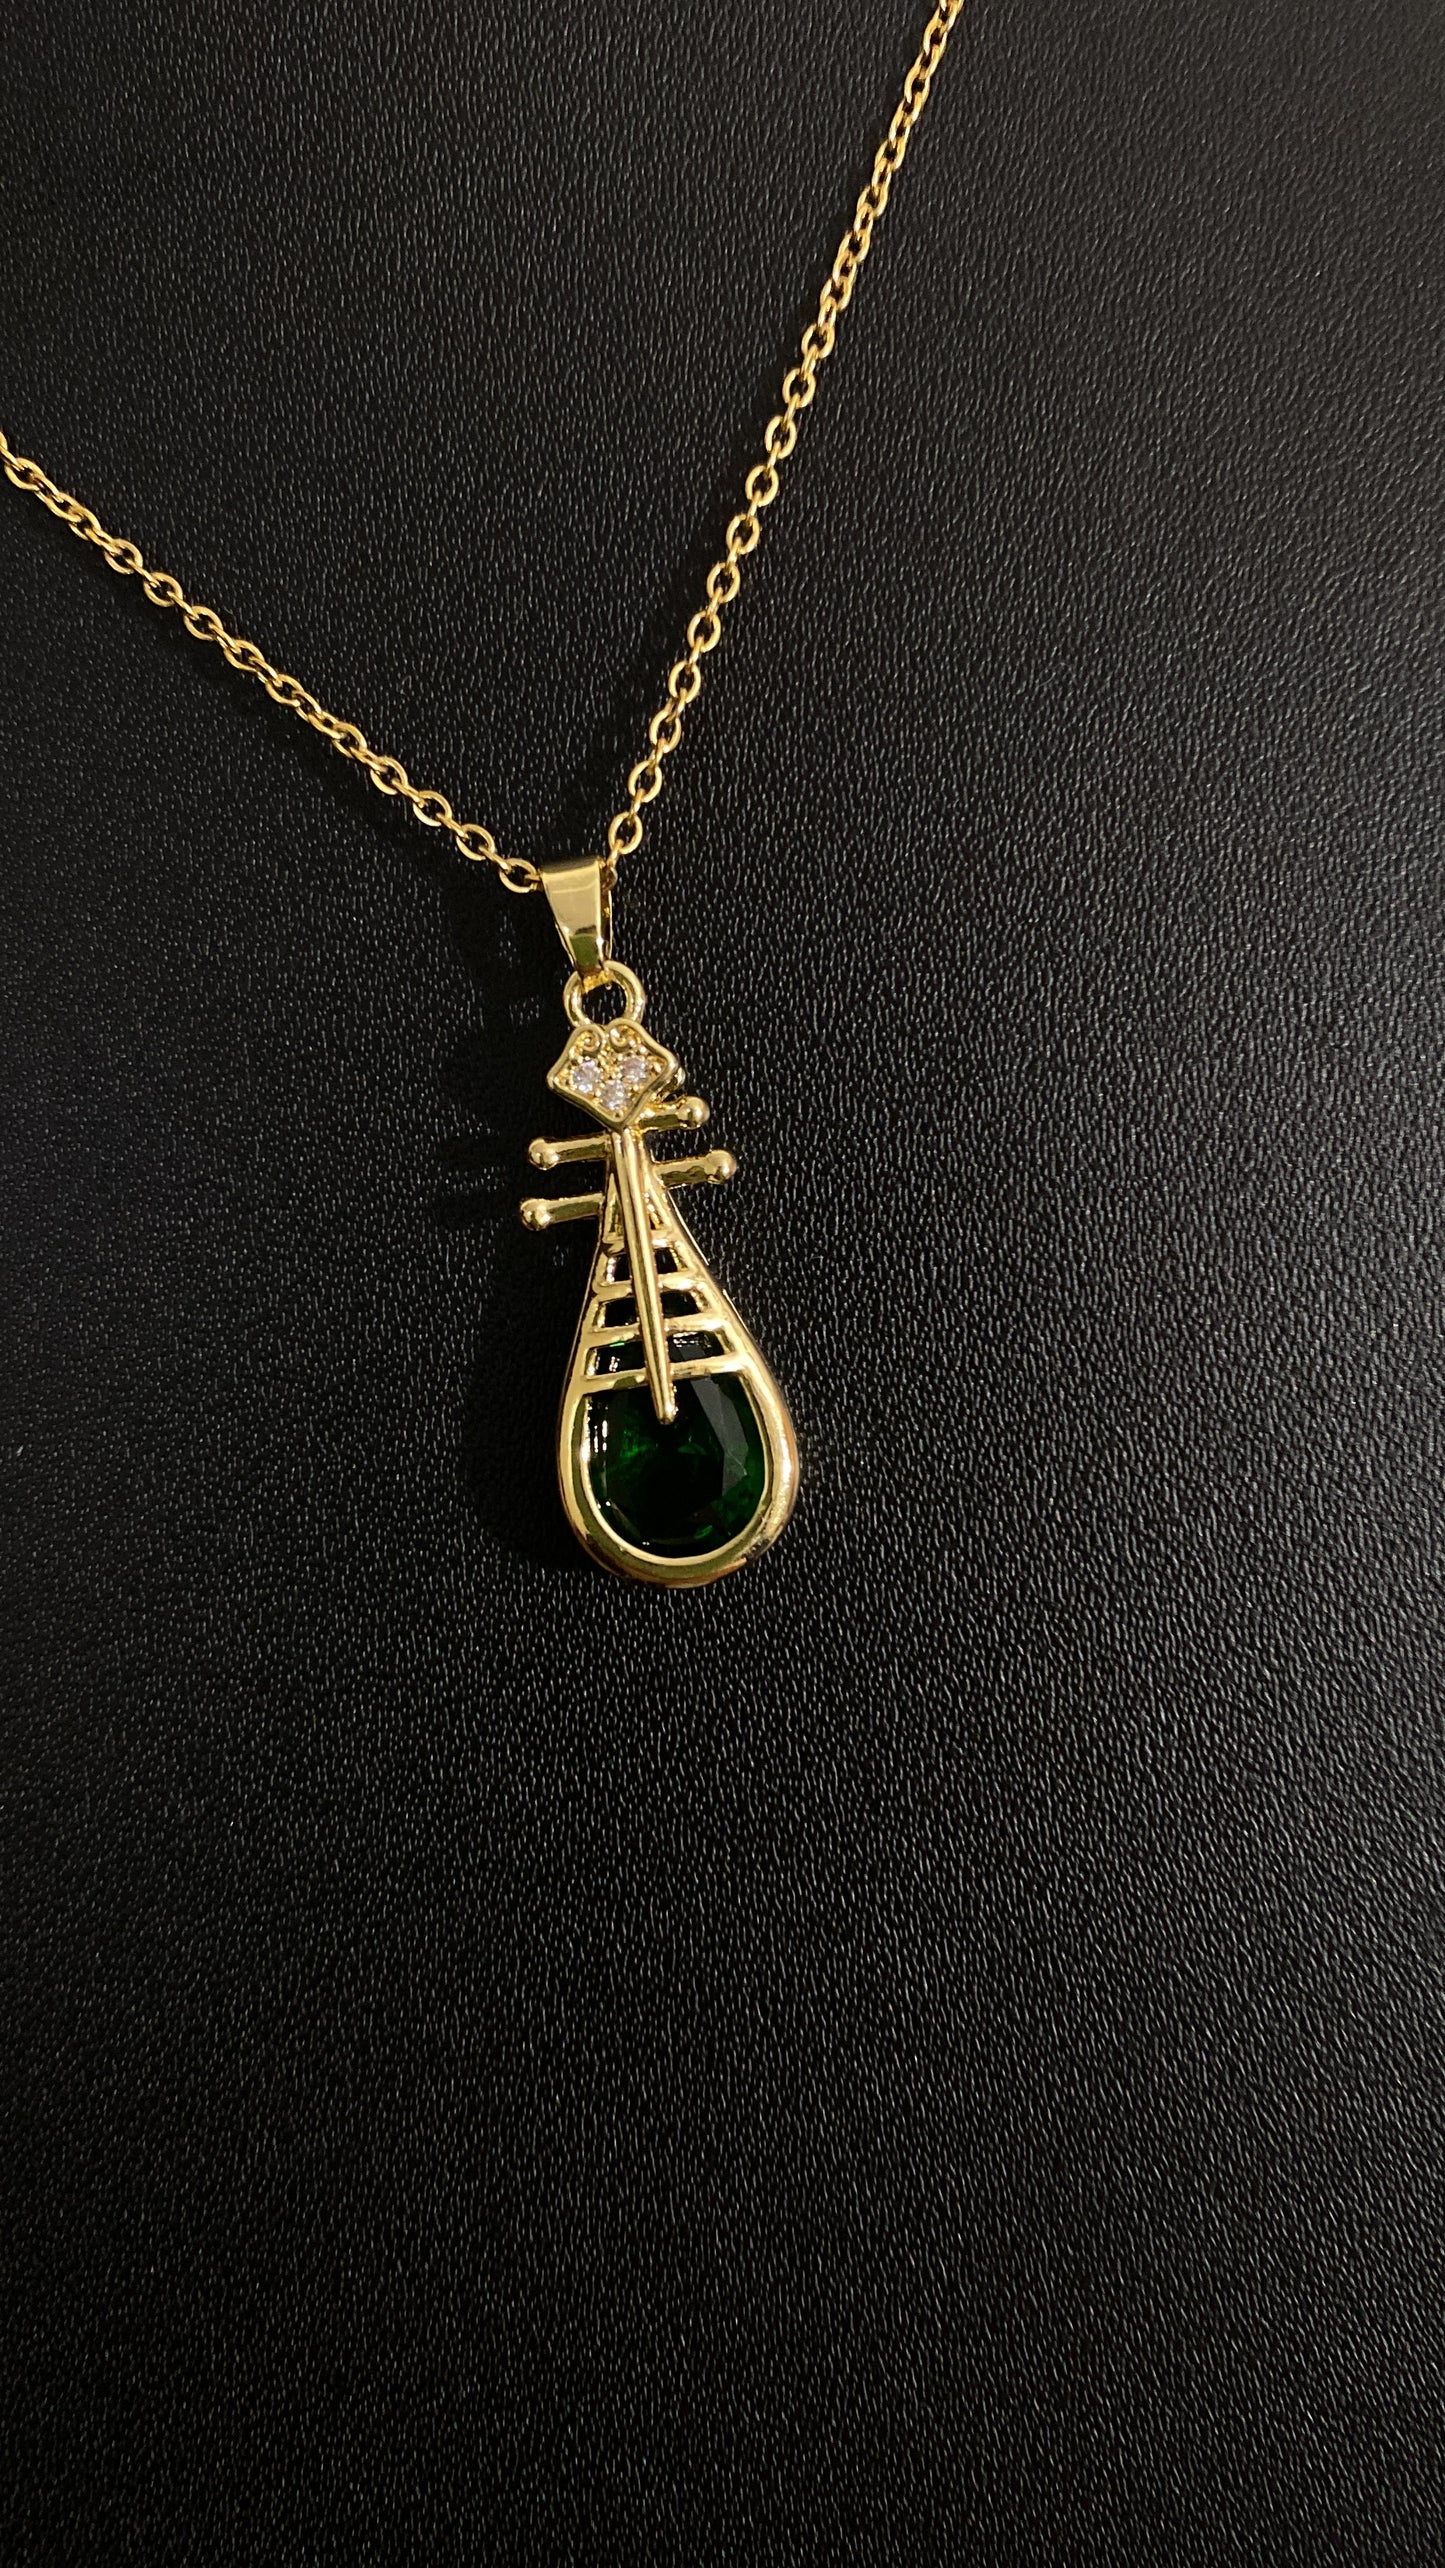 Drop emerald green necklace